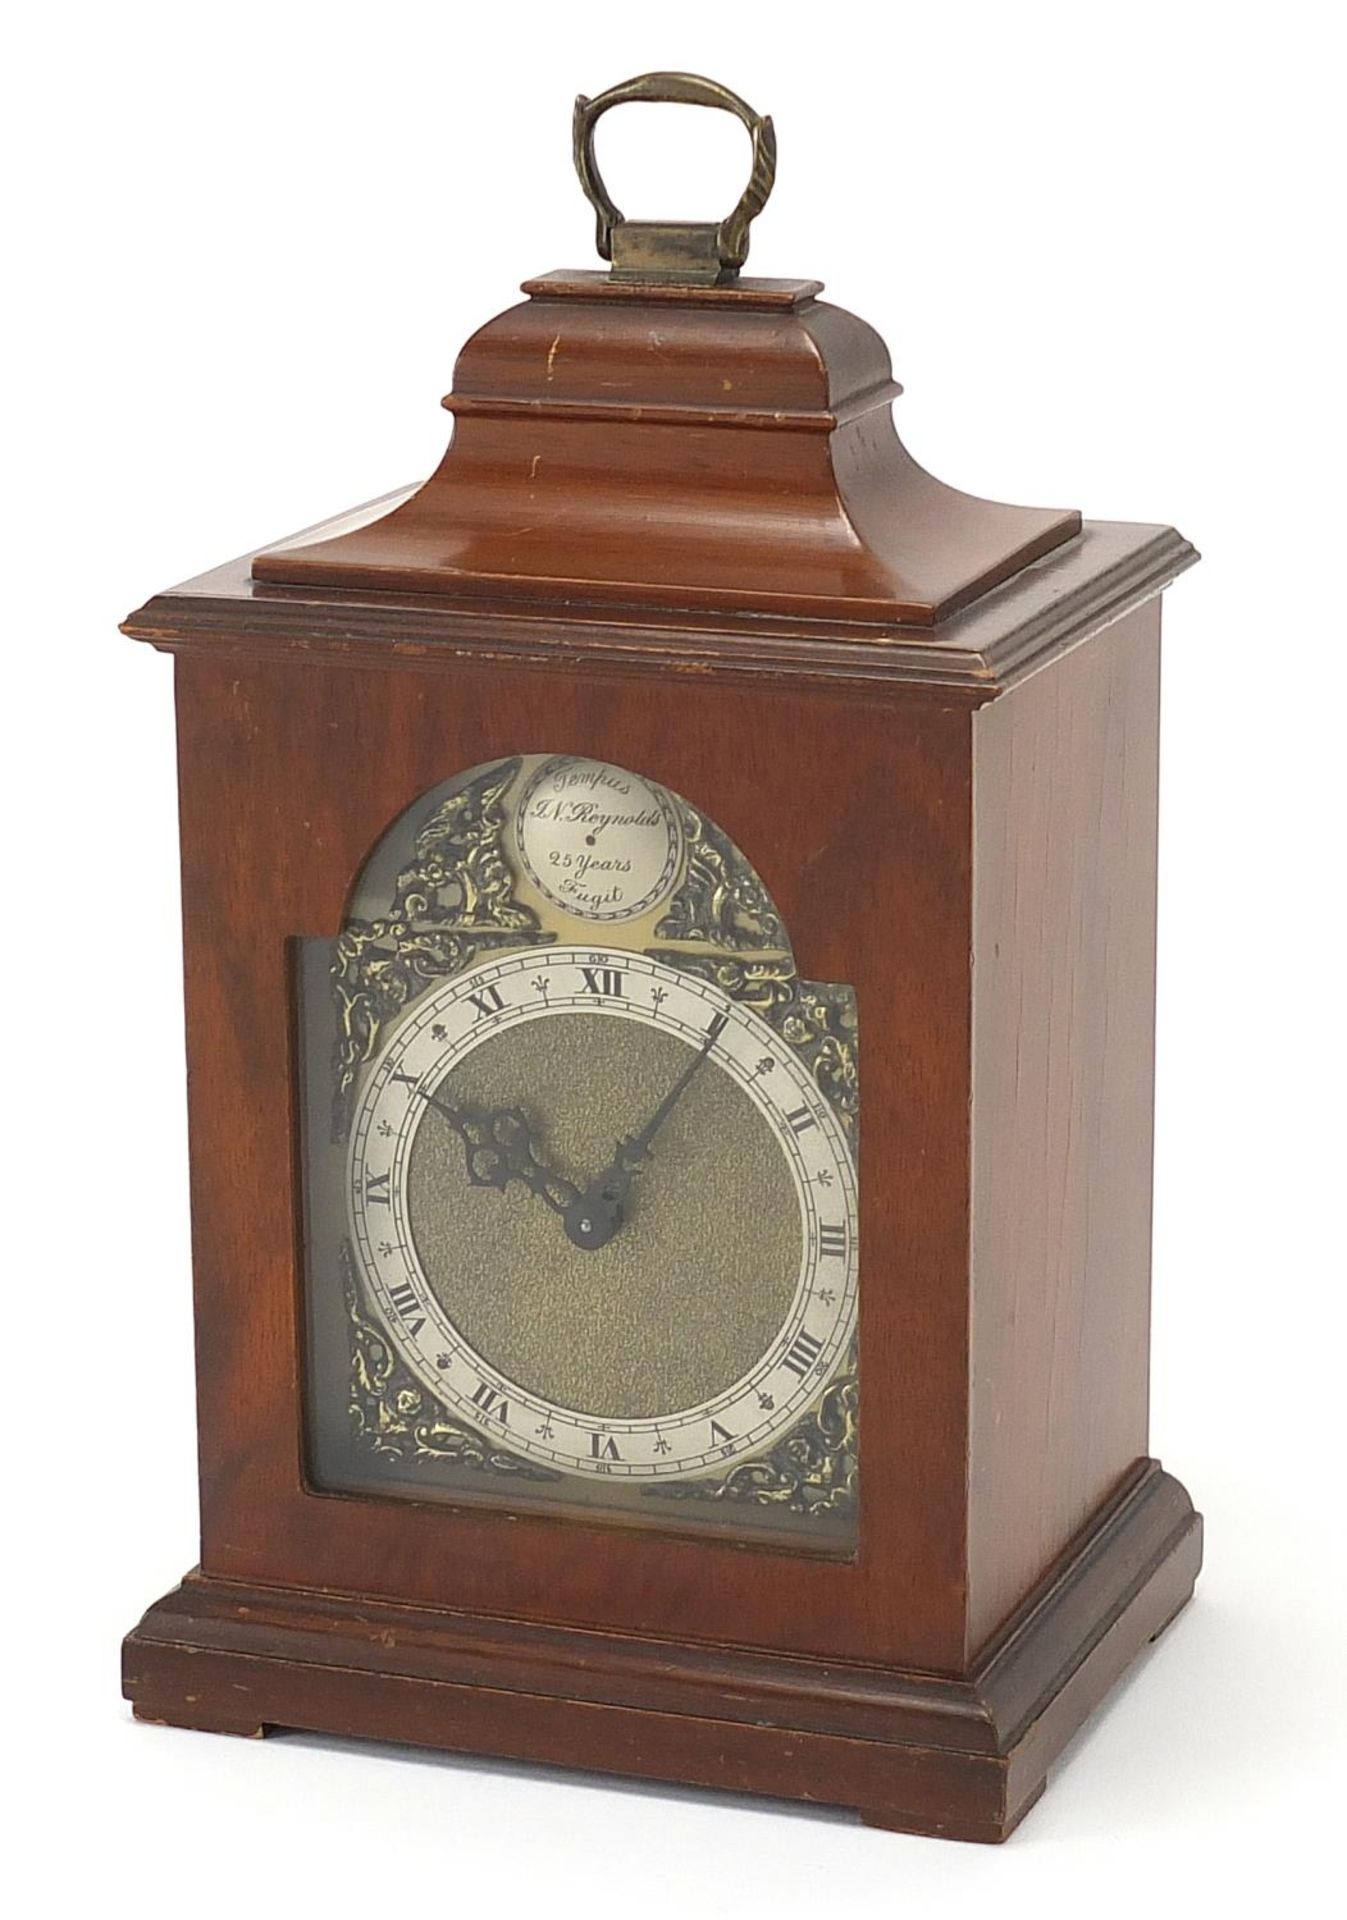 Tempus Fugit mahogany cased mantle clock inscribed J N Reynolds 25 years, 23cm high